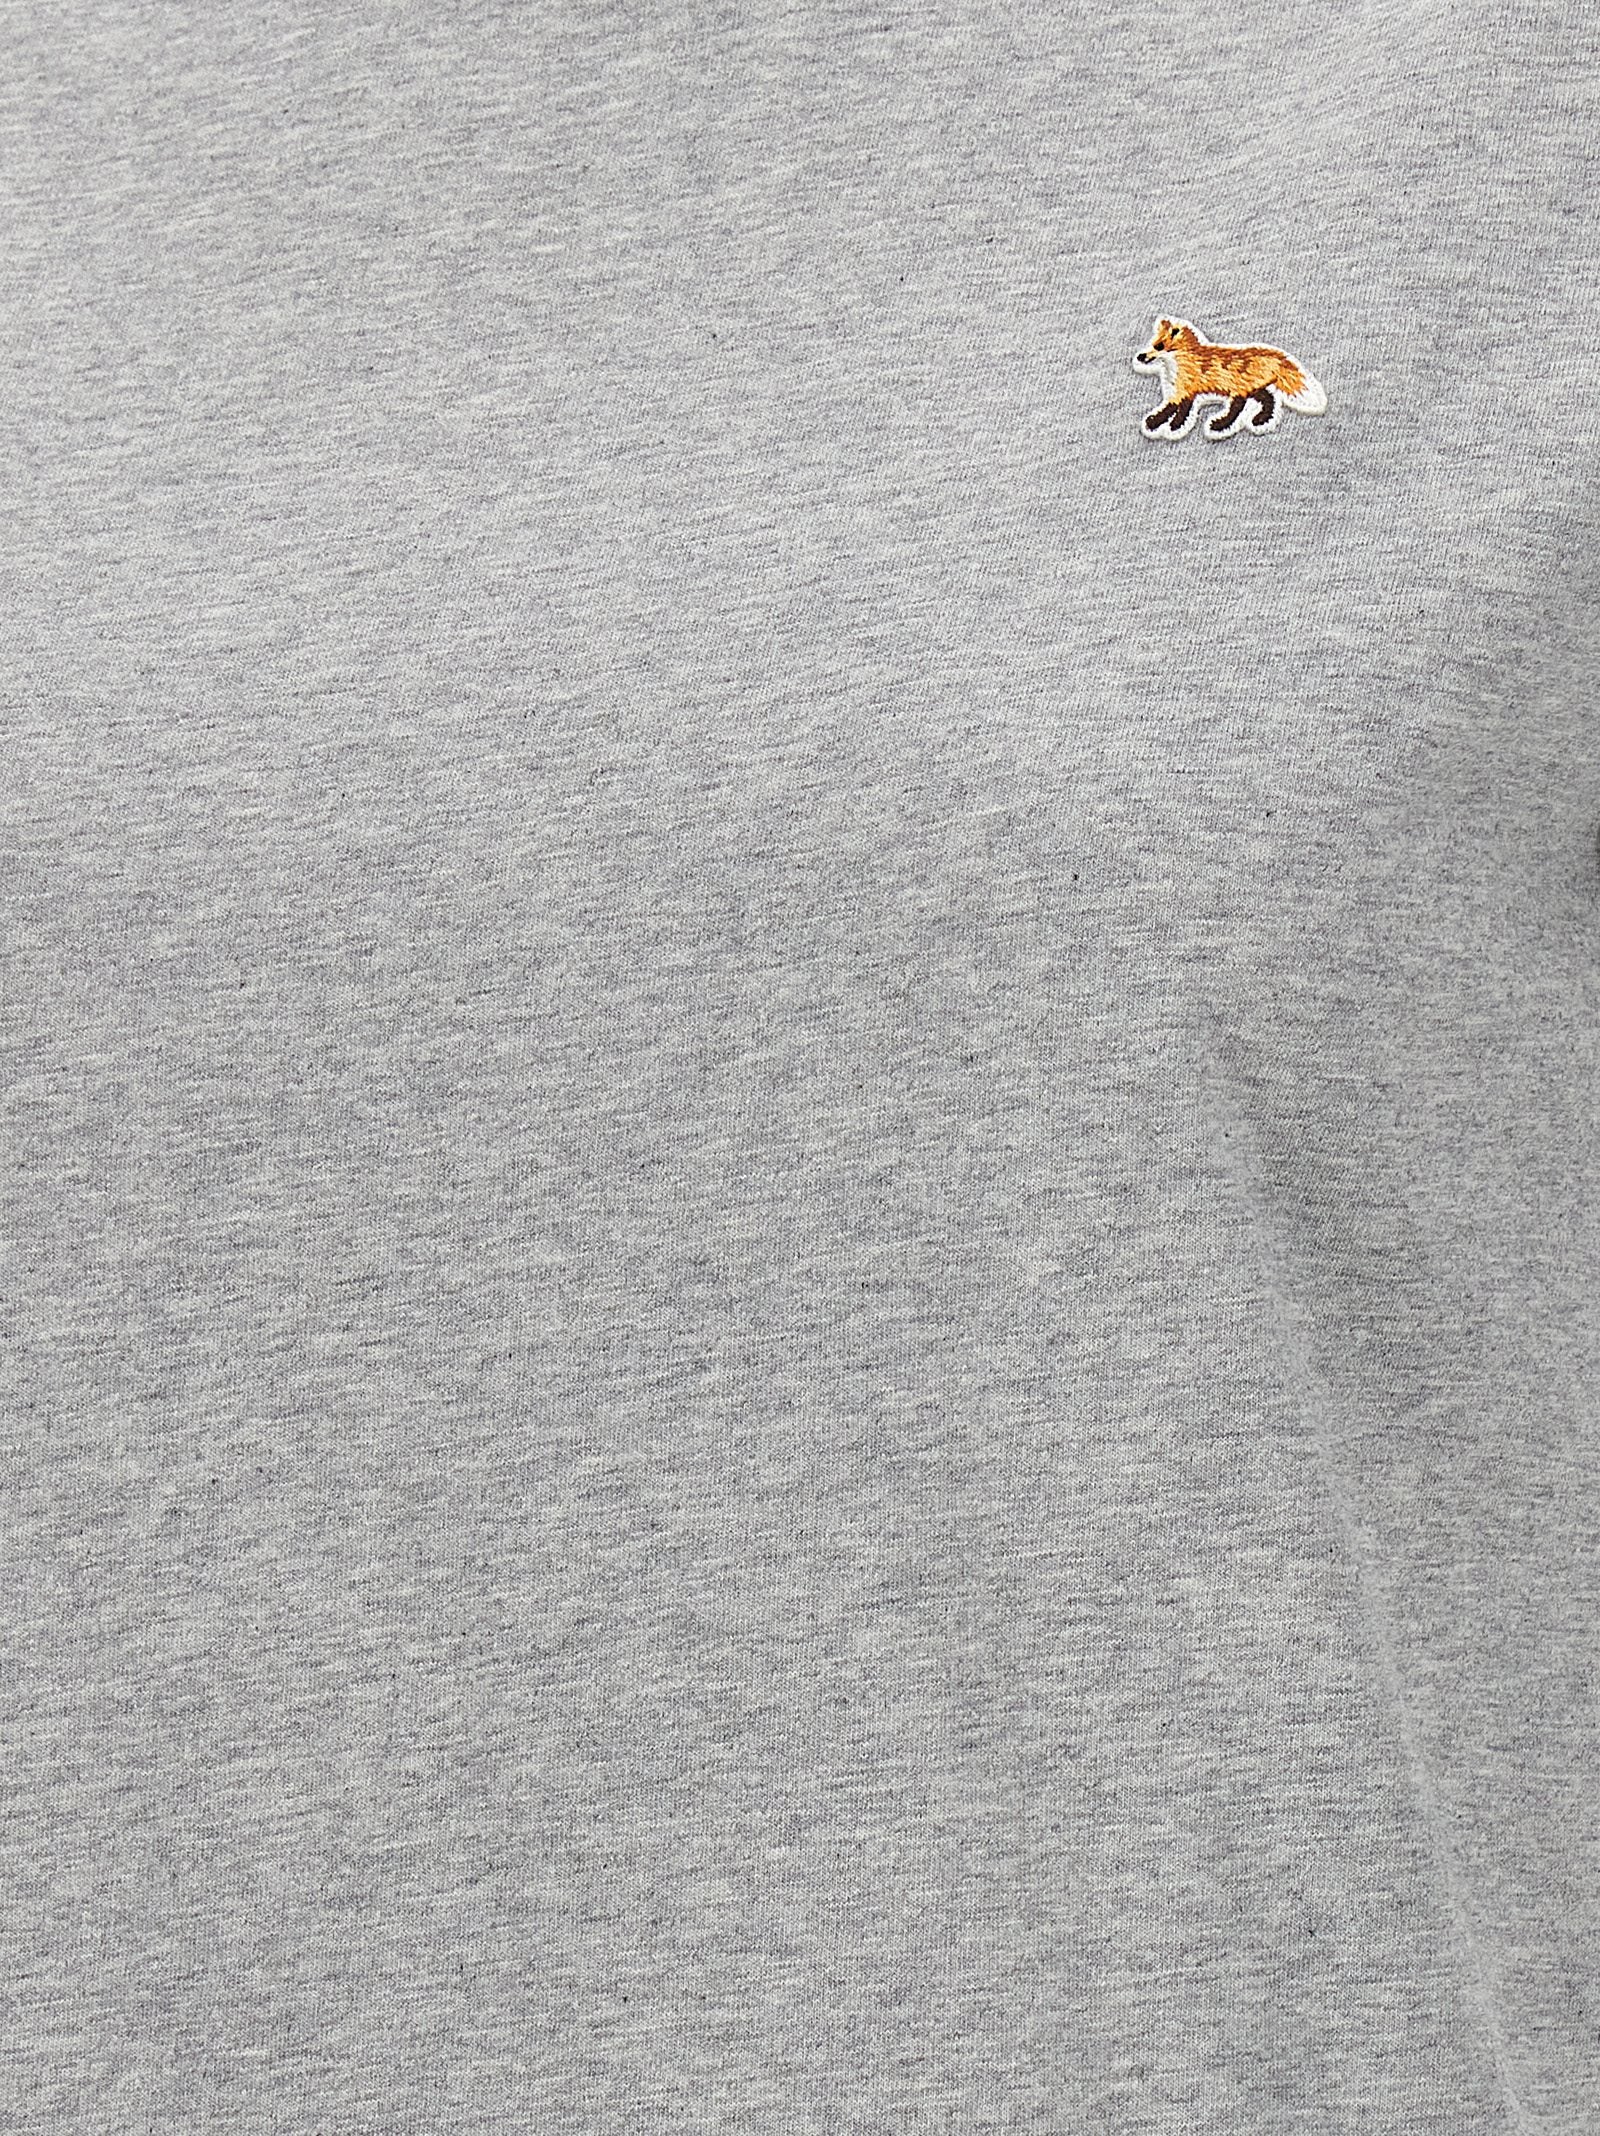 Shop Maison Kitsuné Baby Fox T-shirt Gray